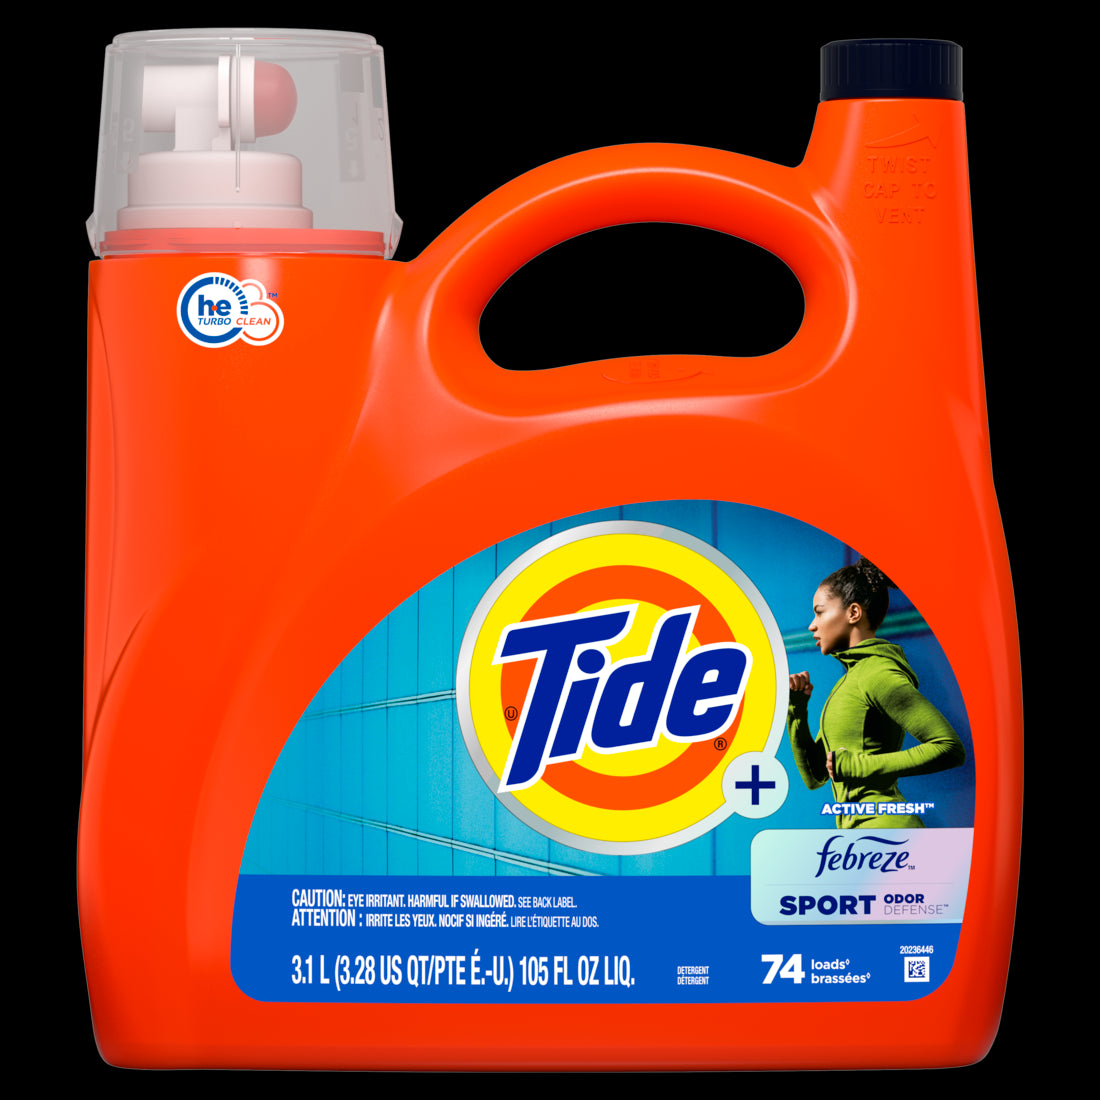 Tide Plus Febreze Sport Odor Defense HE Turbo Clean Liquid Laundry Detergent 74 Loads - 105oz/4pk